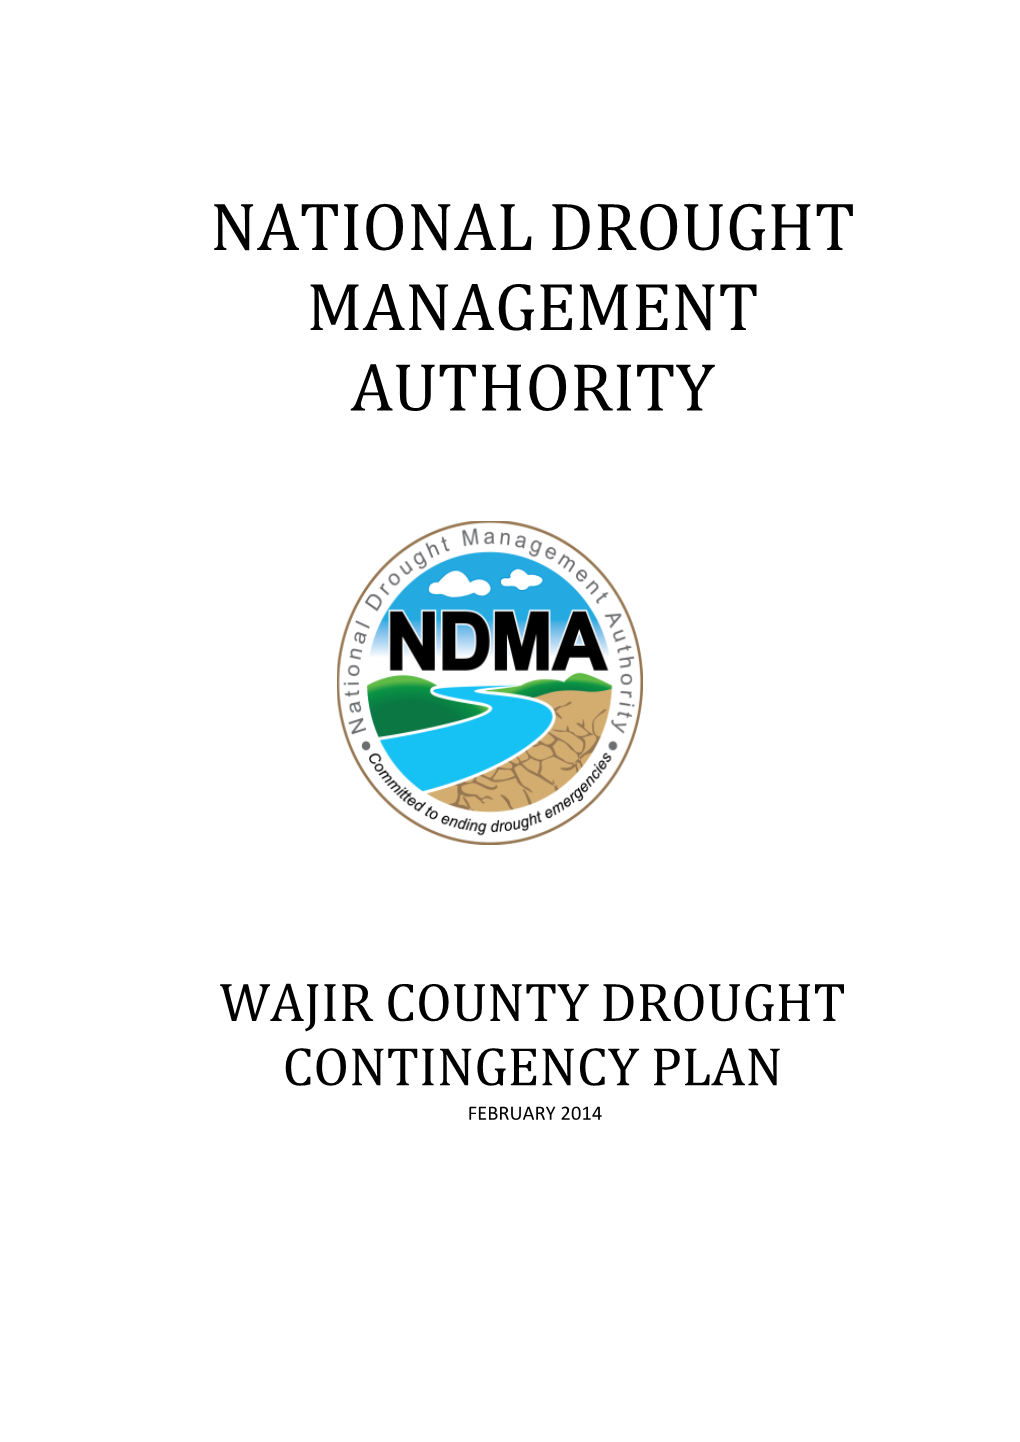 Wajir County Drought Contingency Plan February 2014